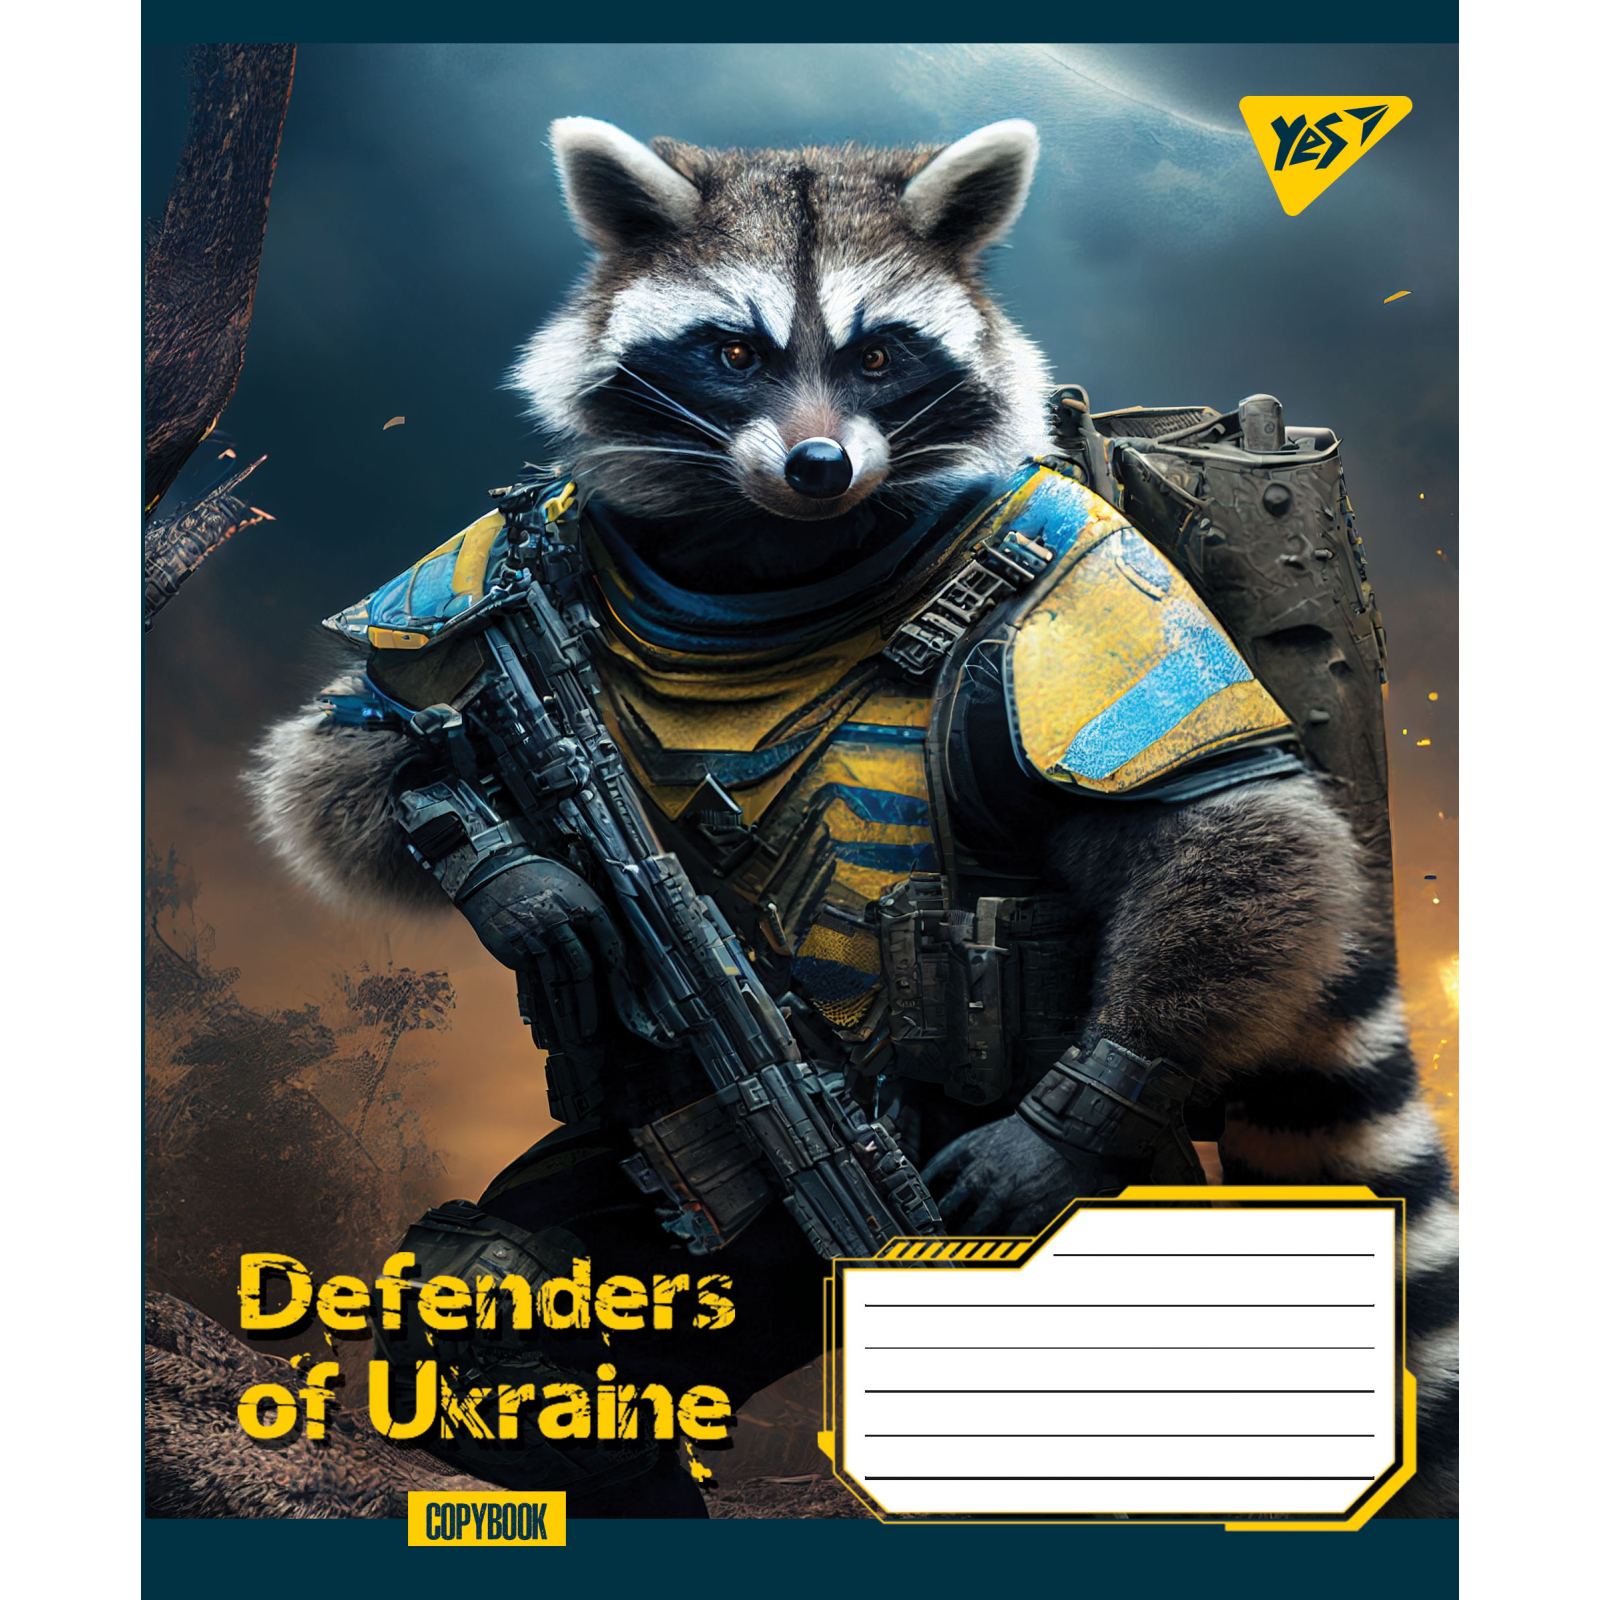 Зошит Yes А5 Defenders of Ukraine 36 аркушів, лінія (766426) зображення 4